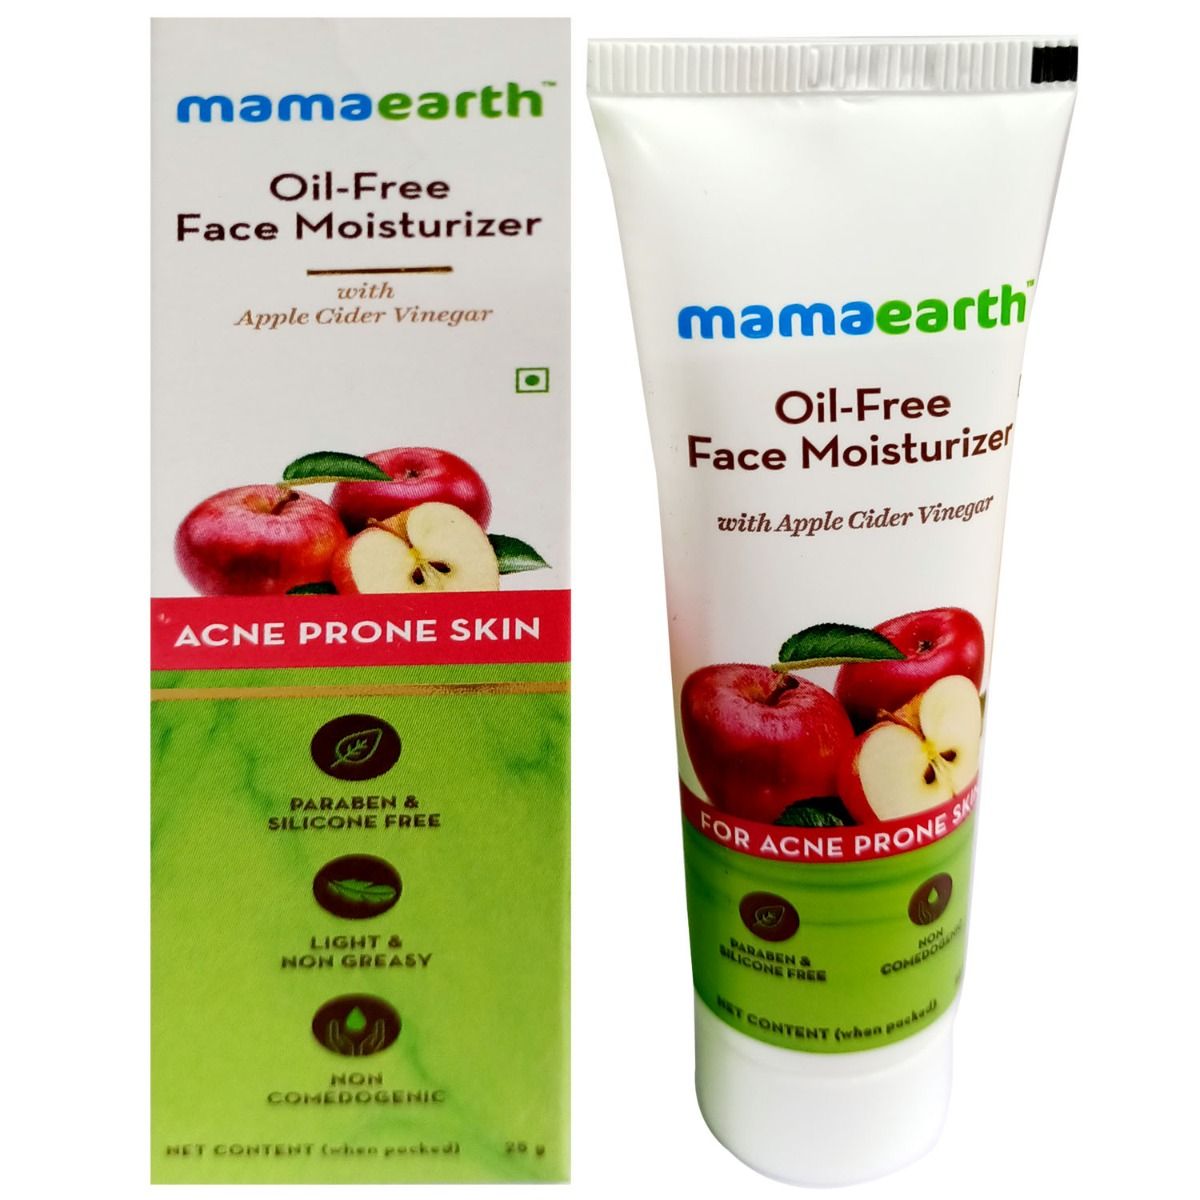 Mamaearth Oil-Free Face Moisturizer Apple Cider Vinegar, 25 ml, Pack of 1 